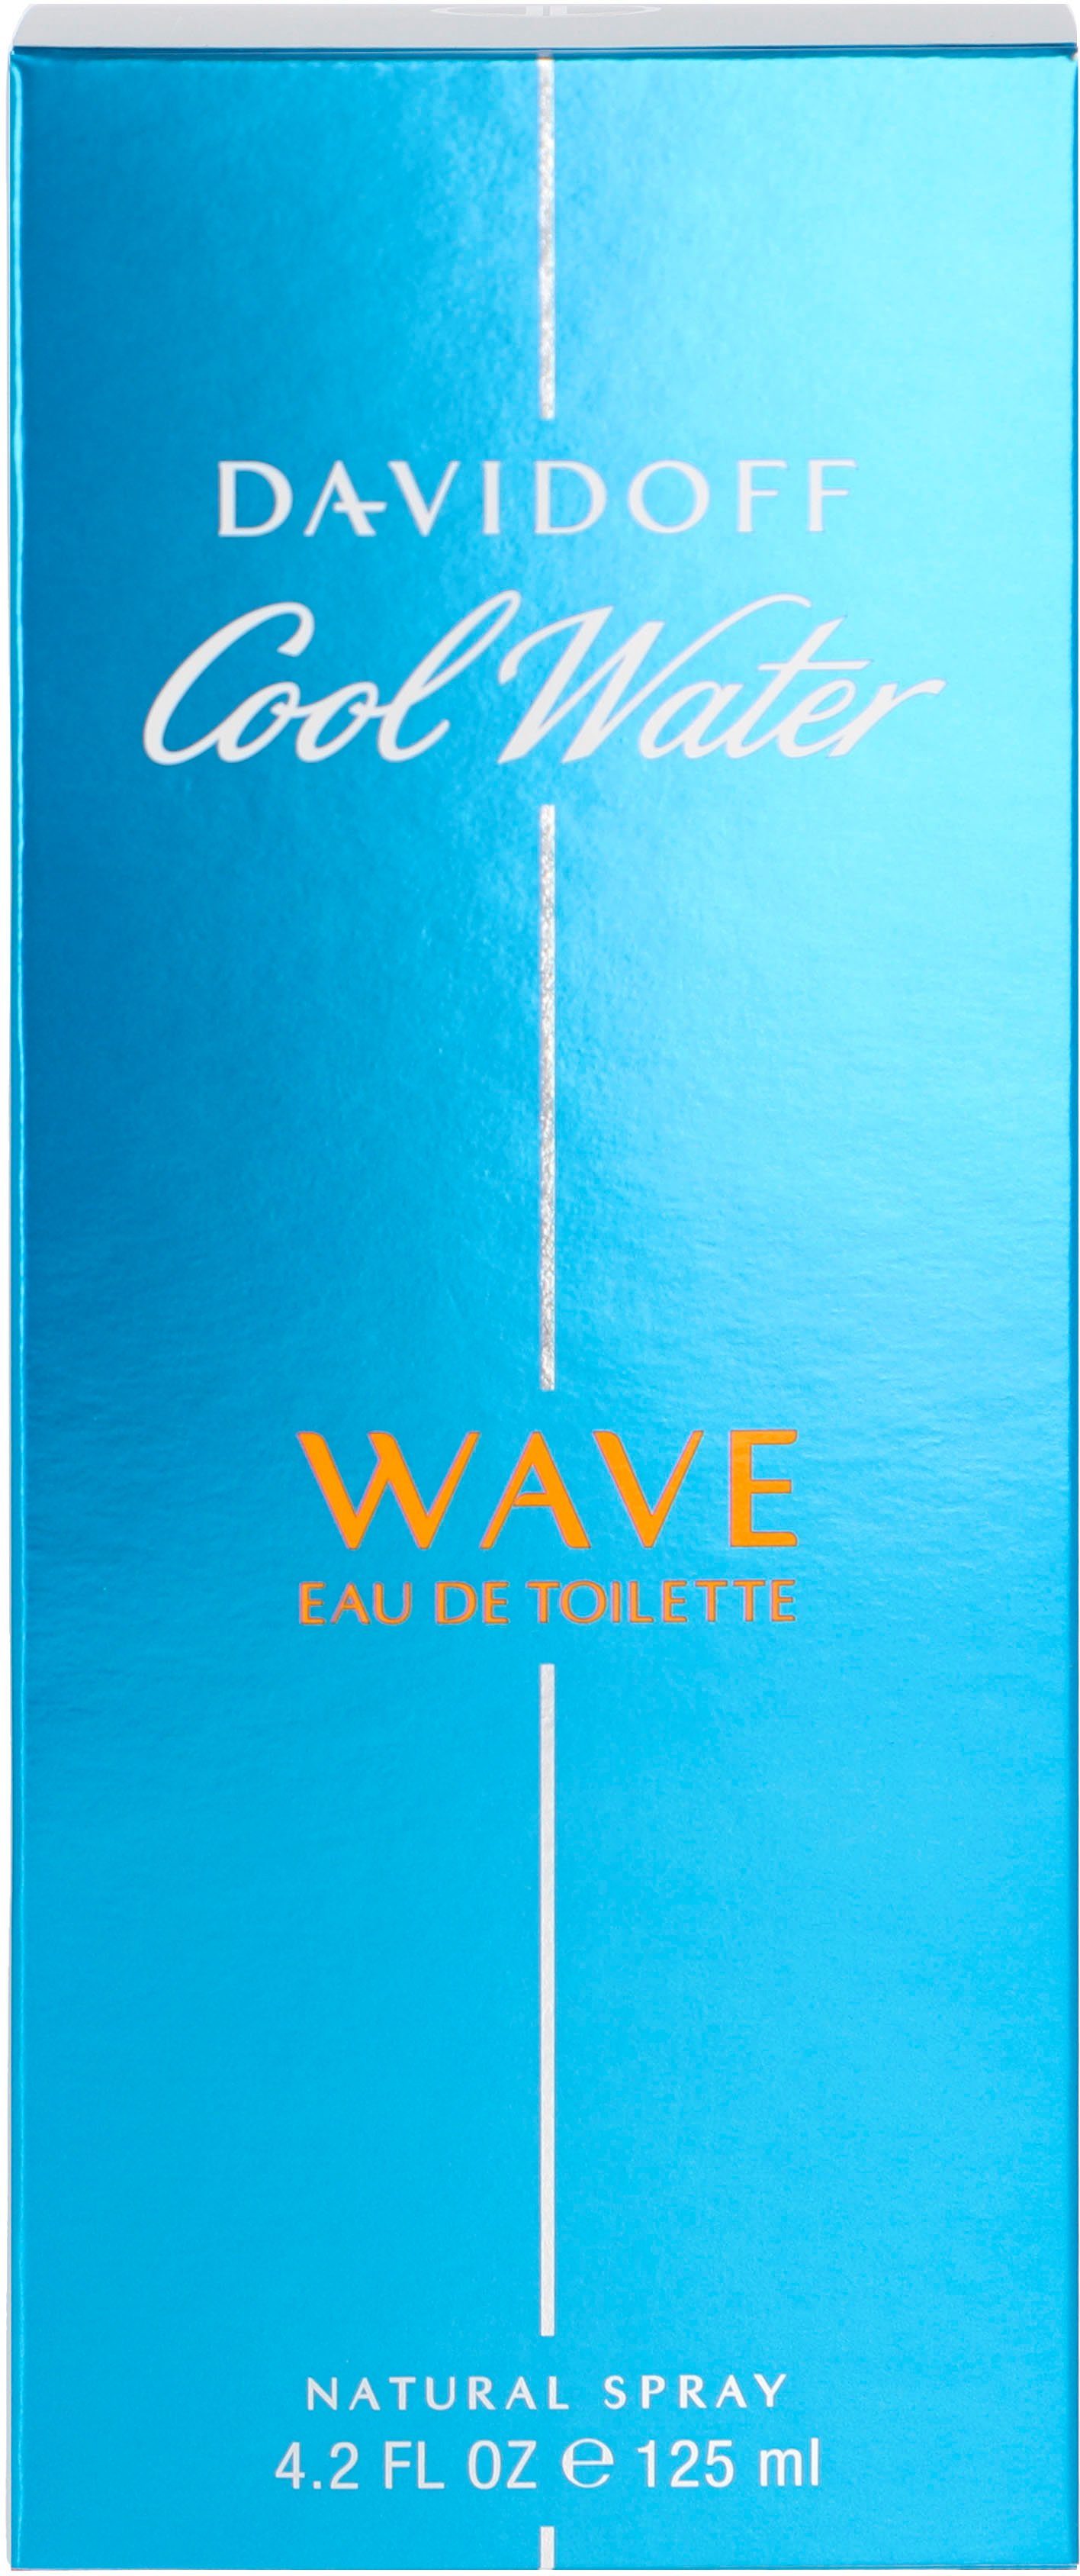 Wave Davidoff de Cool Man Eau Water DAVIDOFF Toilette